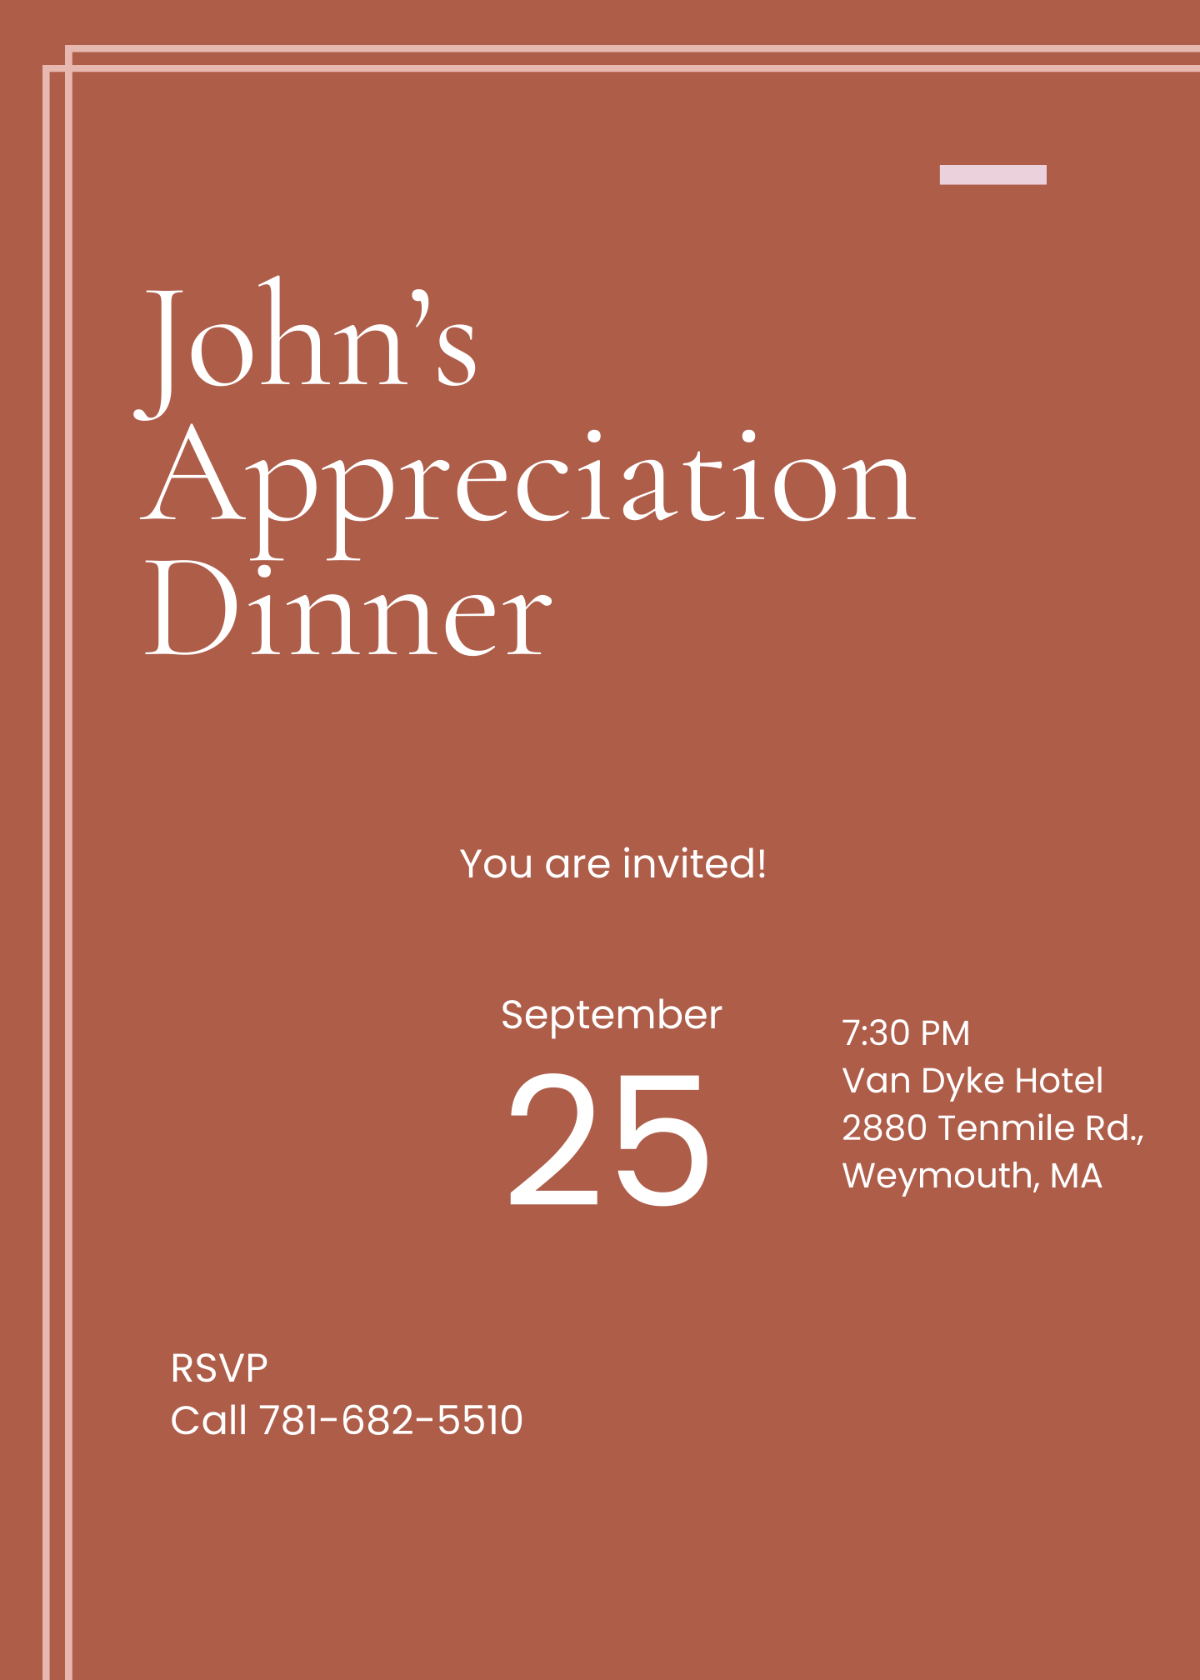 Free Modern Appreciation Dinner Invitation Template